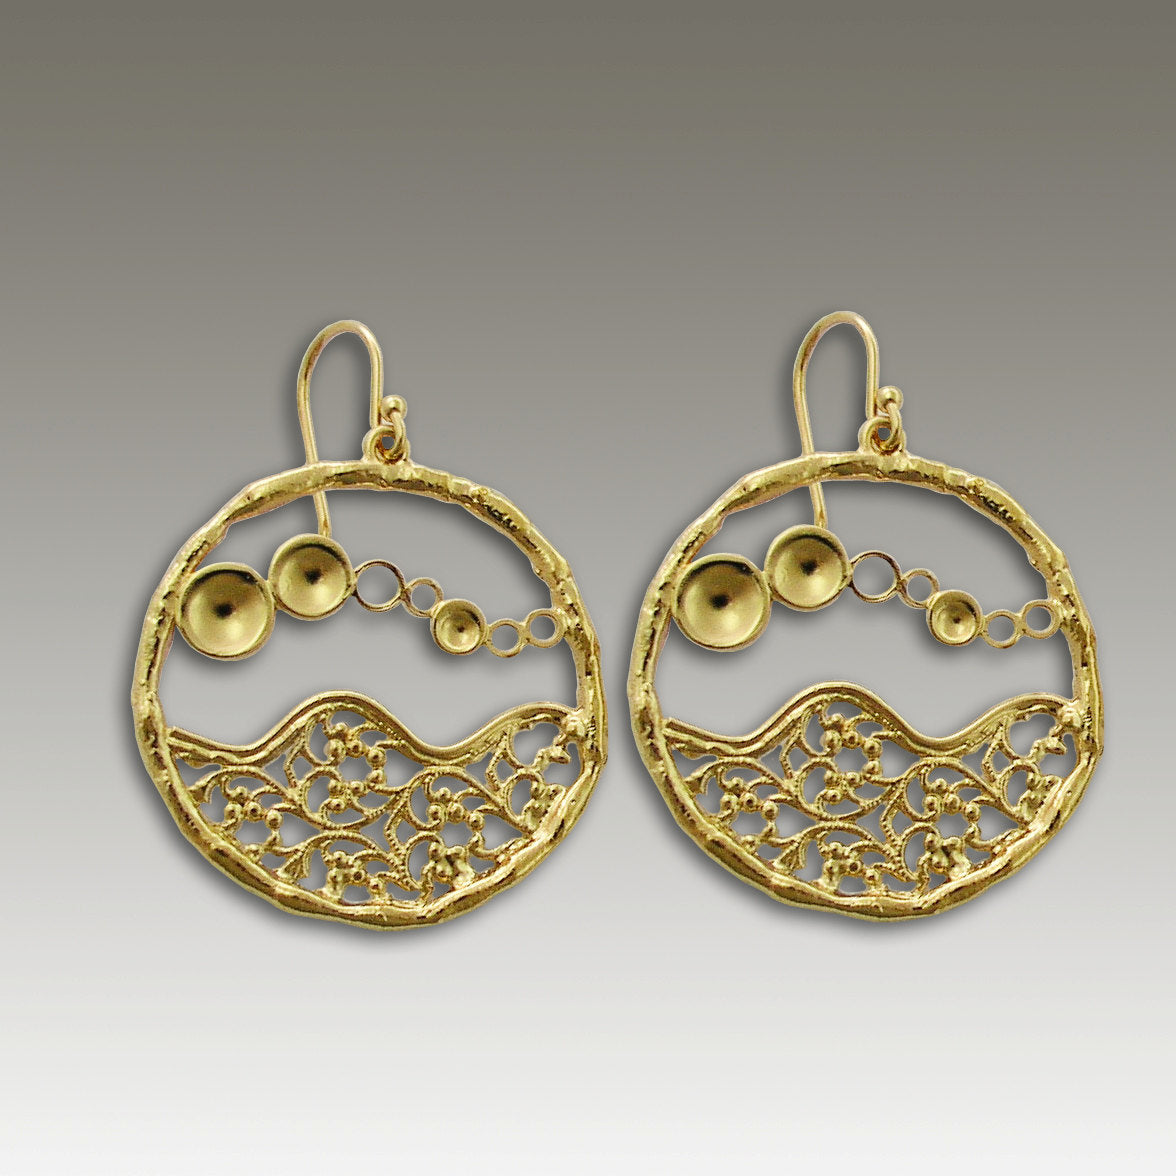 Solid Gold Earrings, 14k gold earrings, dangle gold earrings, round lace earrings, simple earrings, bridal earrings - Golden waves. EG2171